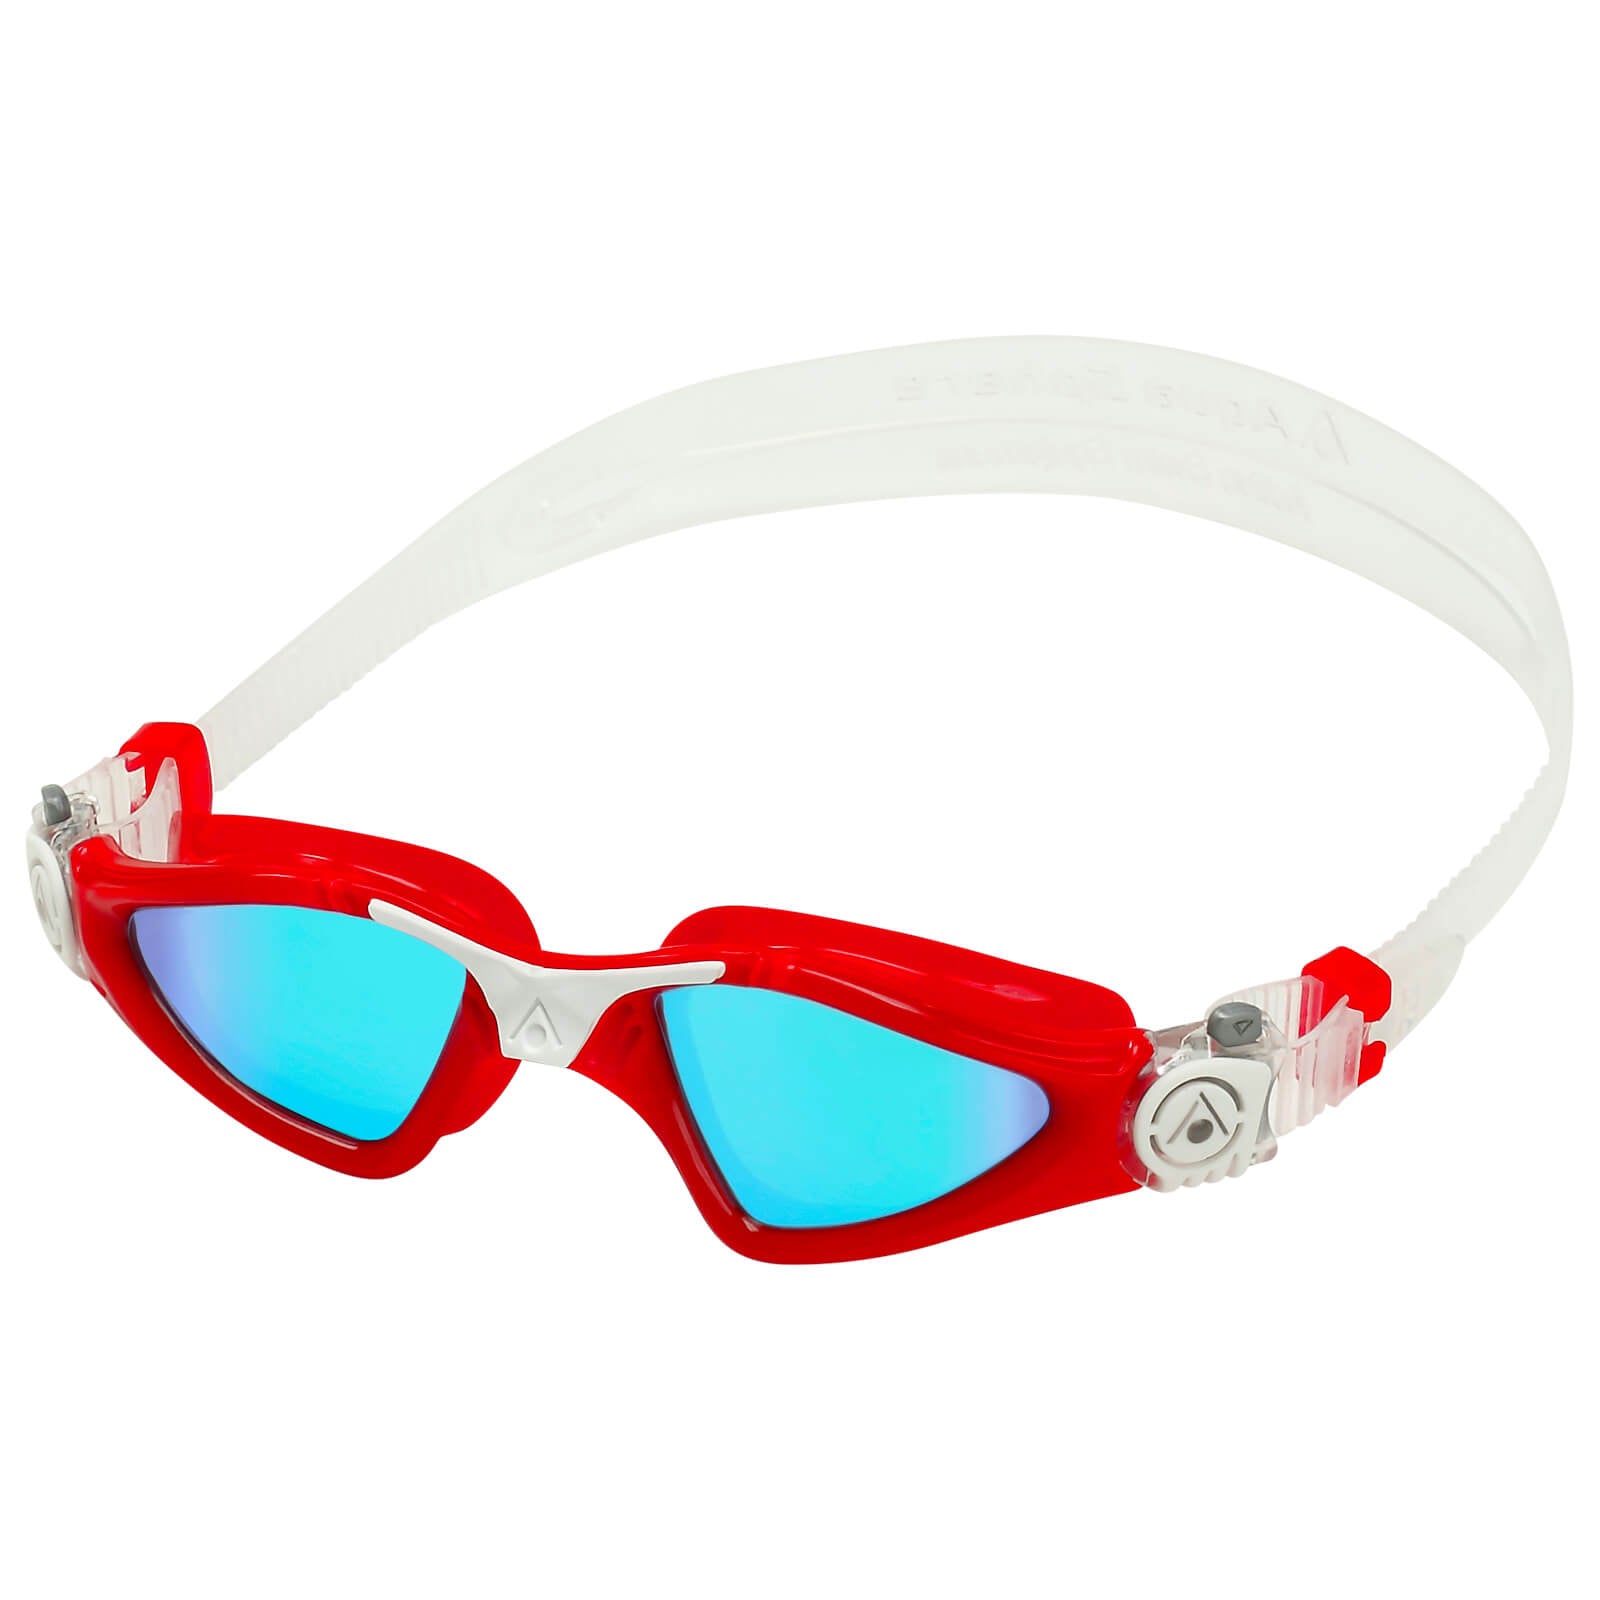 Men's Swimming Goggles Aqua Sphere Kayenne Compact Adult Triathlon Open Water Red/White - Blue Titanium Mirrored